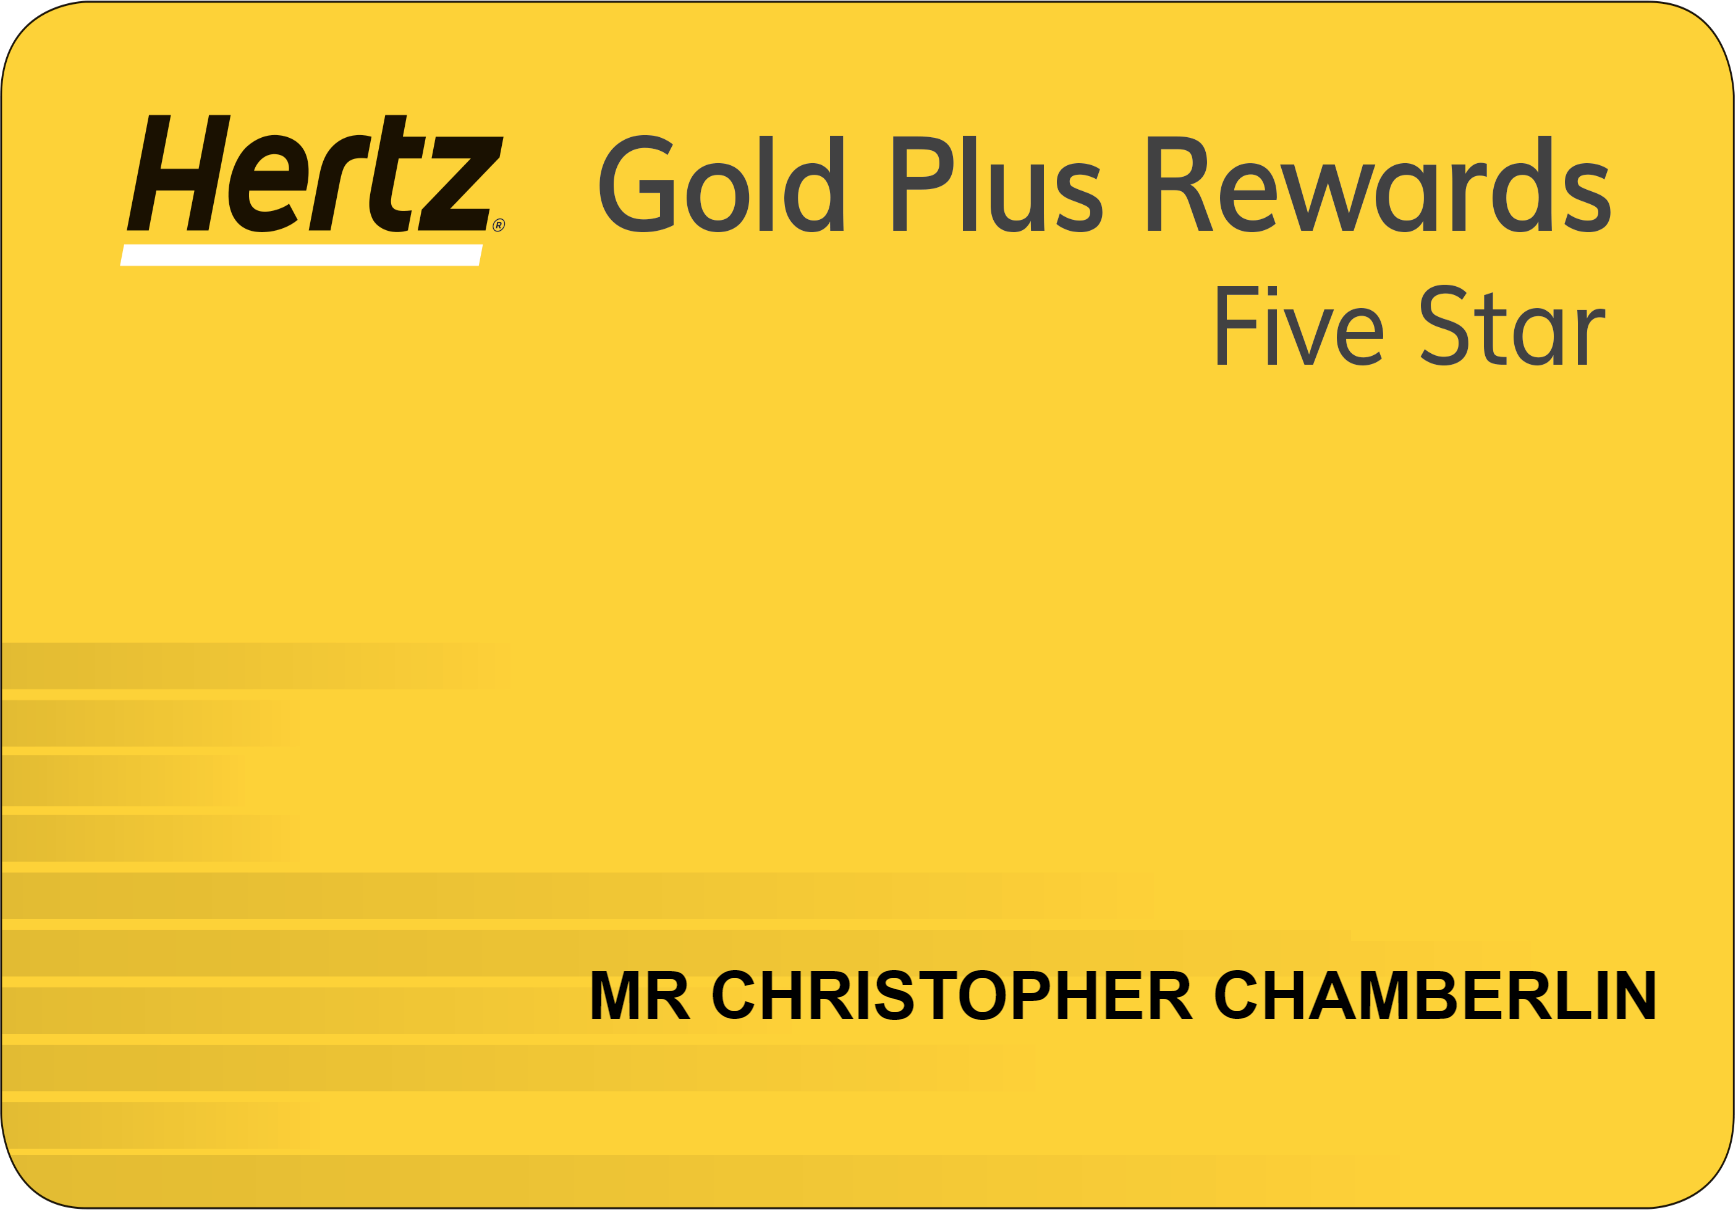 Hertz Gold Plus Rewards Five Star elite membership card